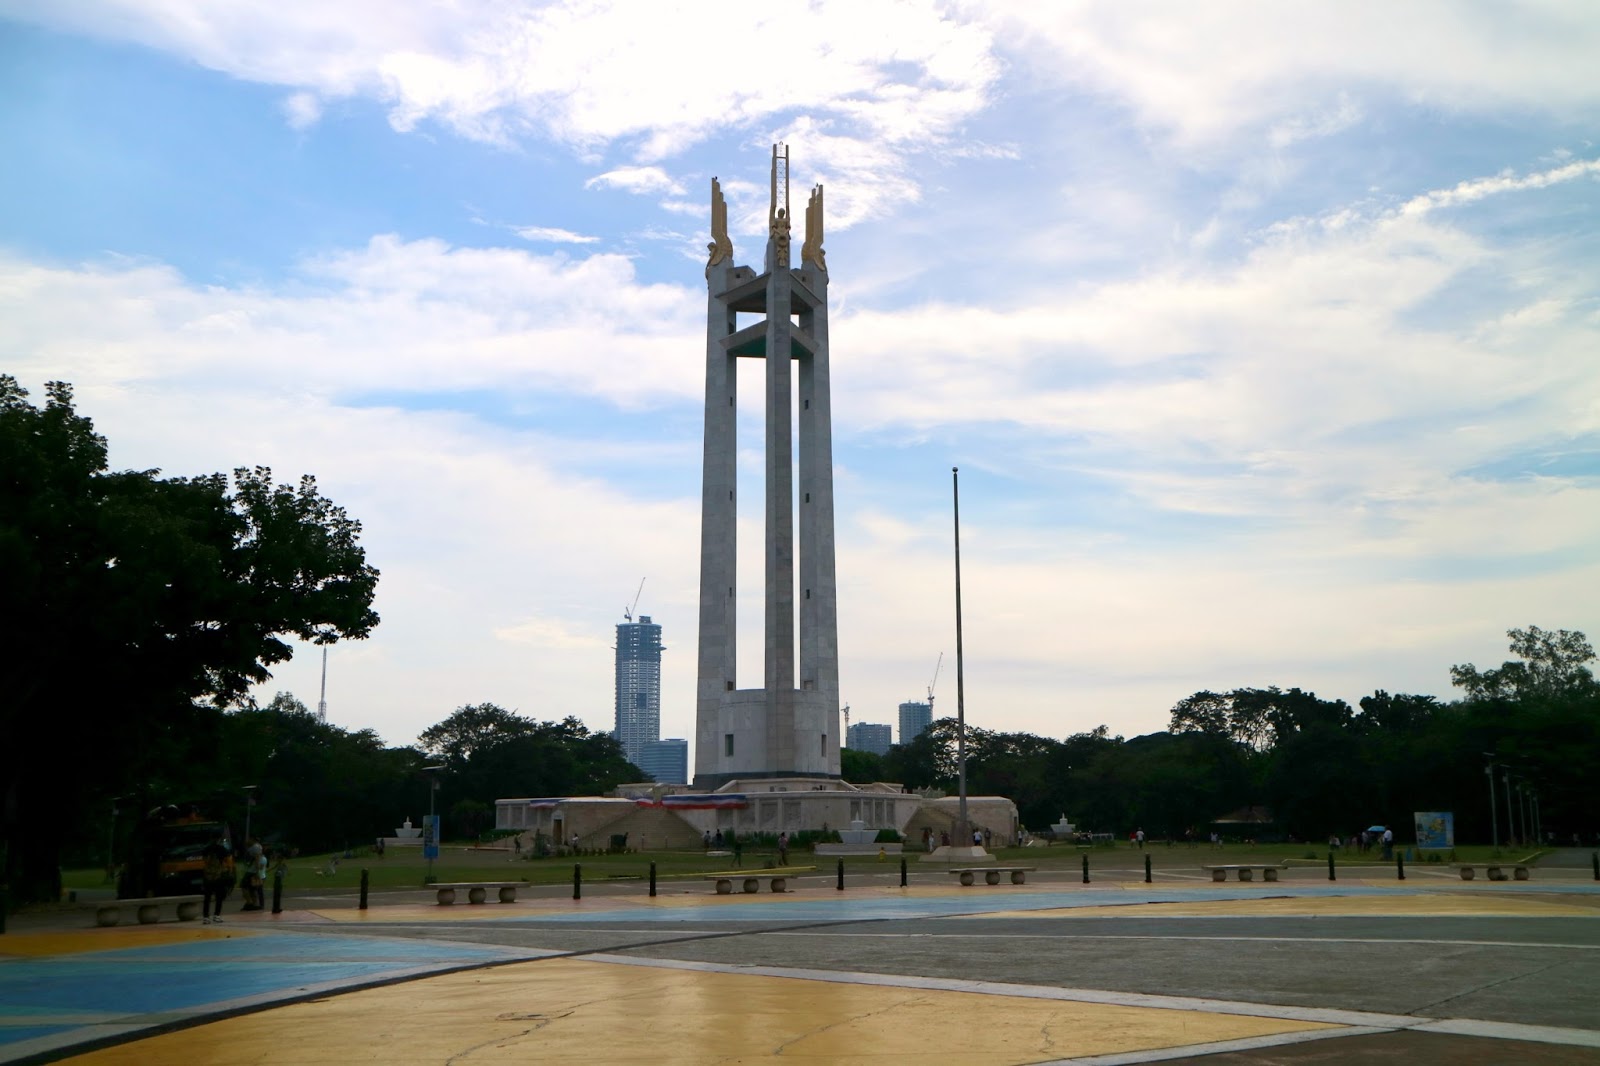 Photo Walk: Quezon Memorial Circle - Living in the Moment